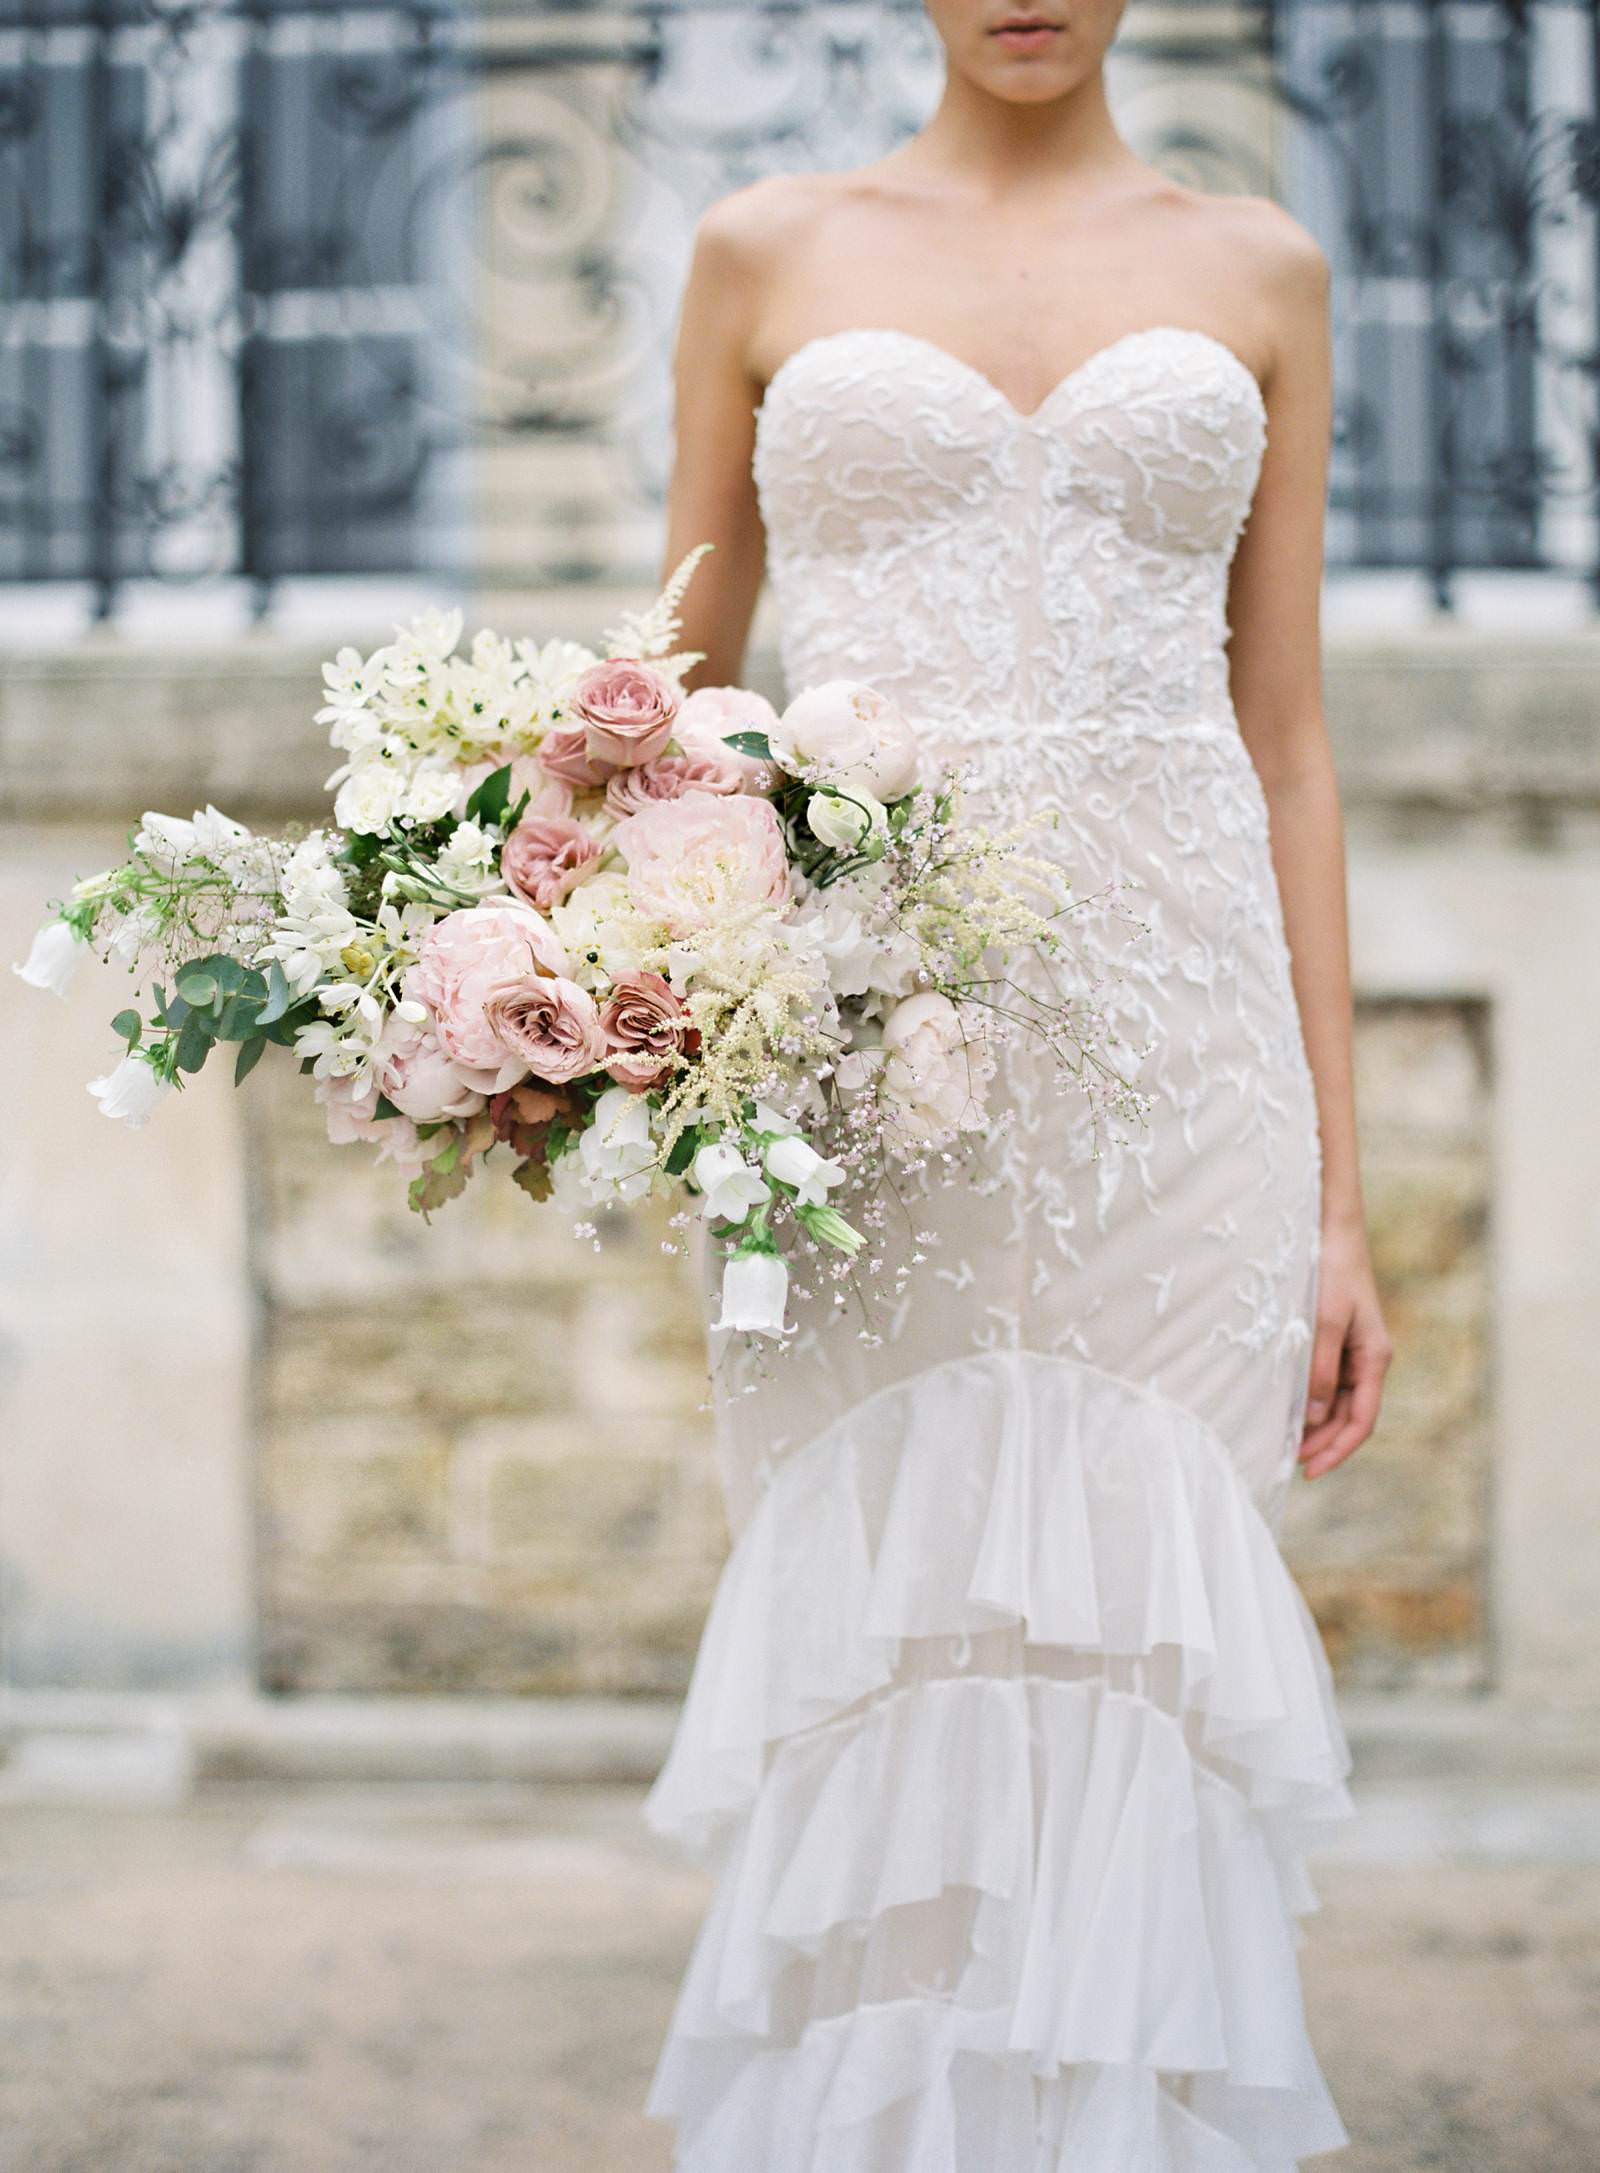 hemingway bridal bouquet- paris wedding florist